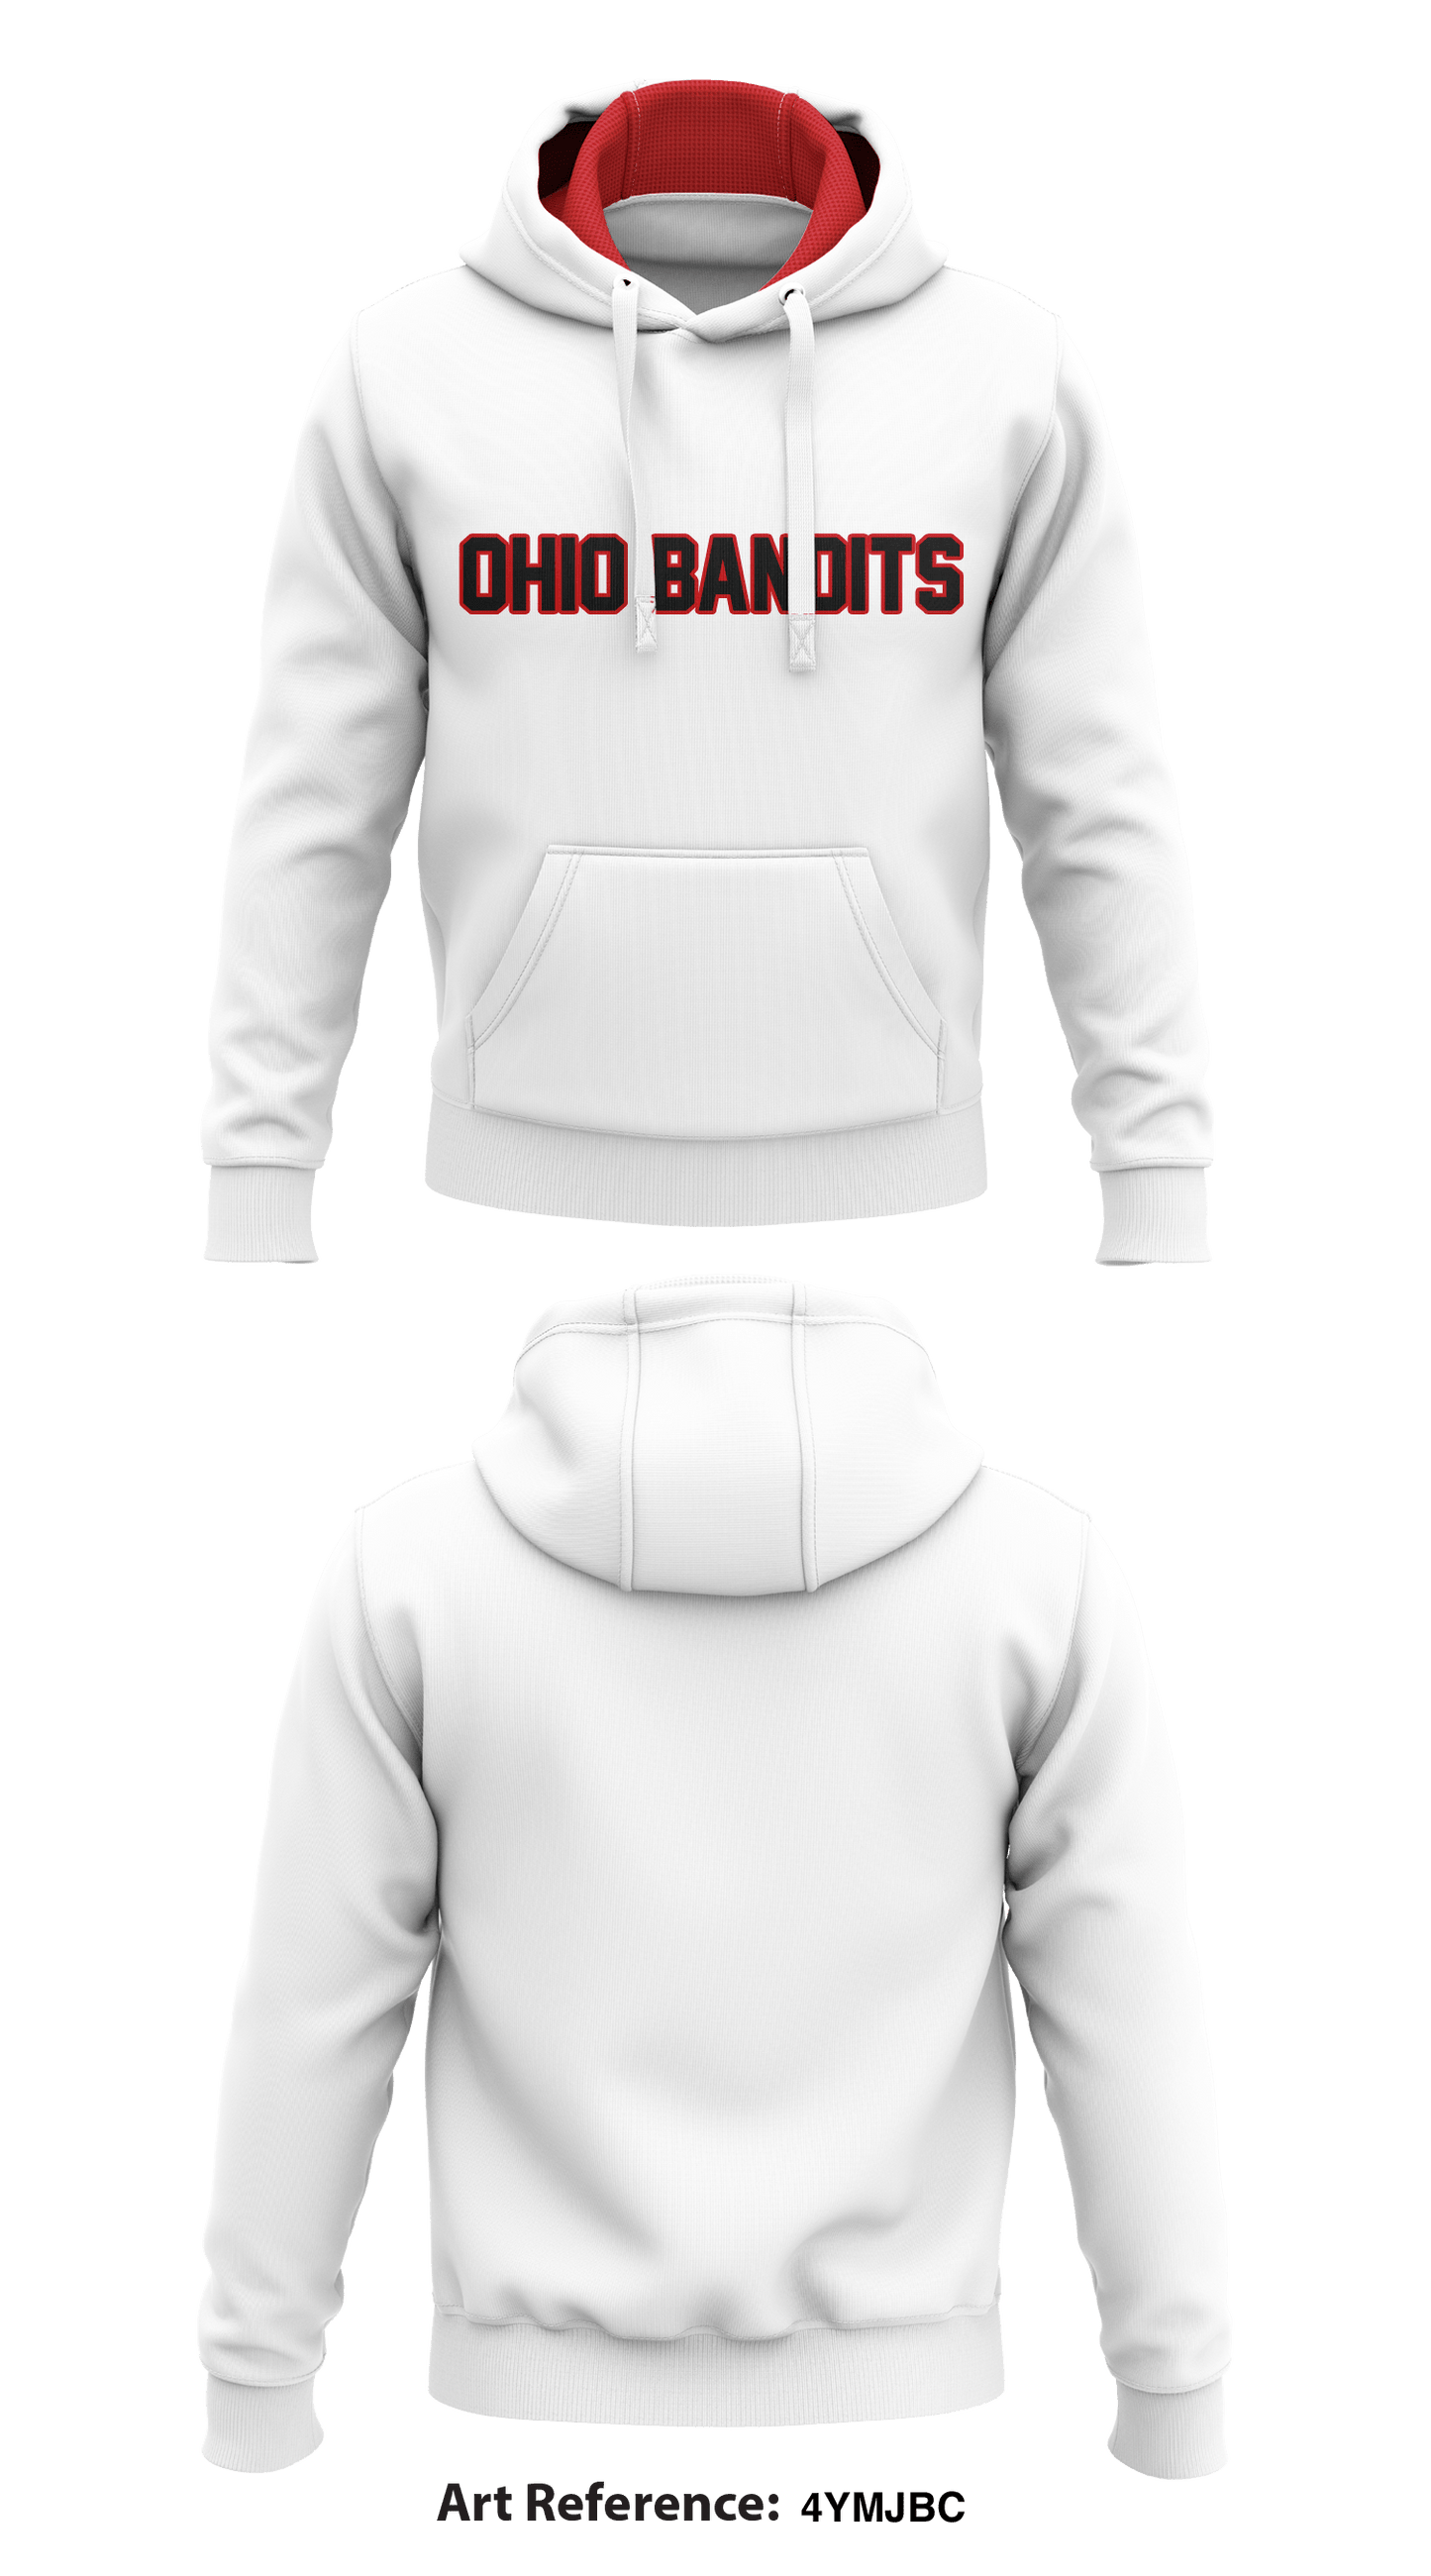 Ohio Bandits  Store 2  Core Men's Hooded Performance Sweatshirt - 4ymjBC